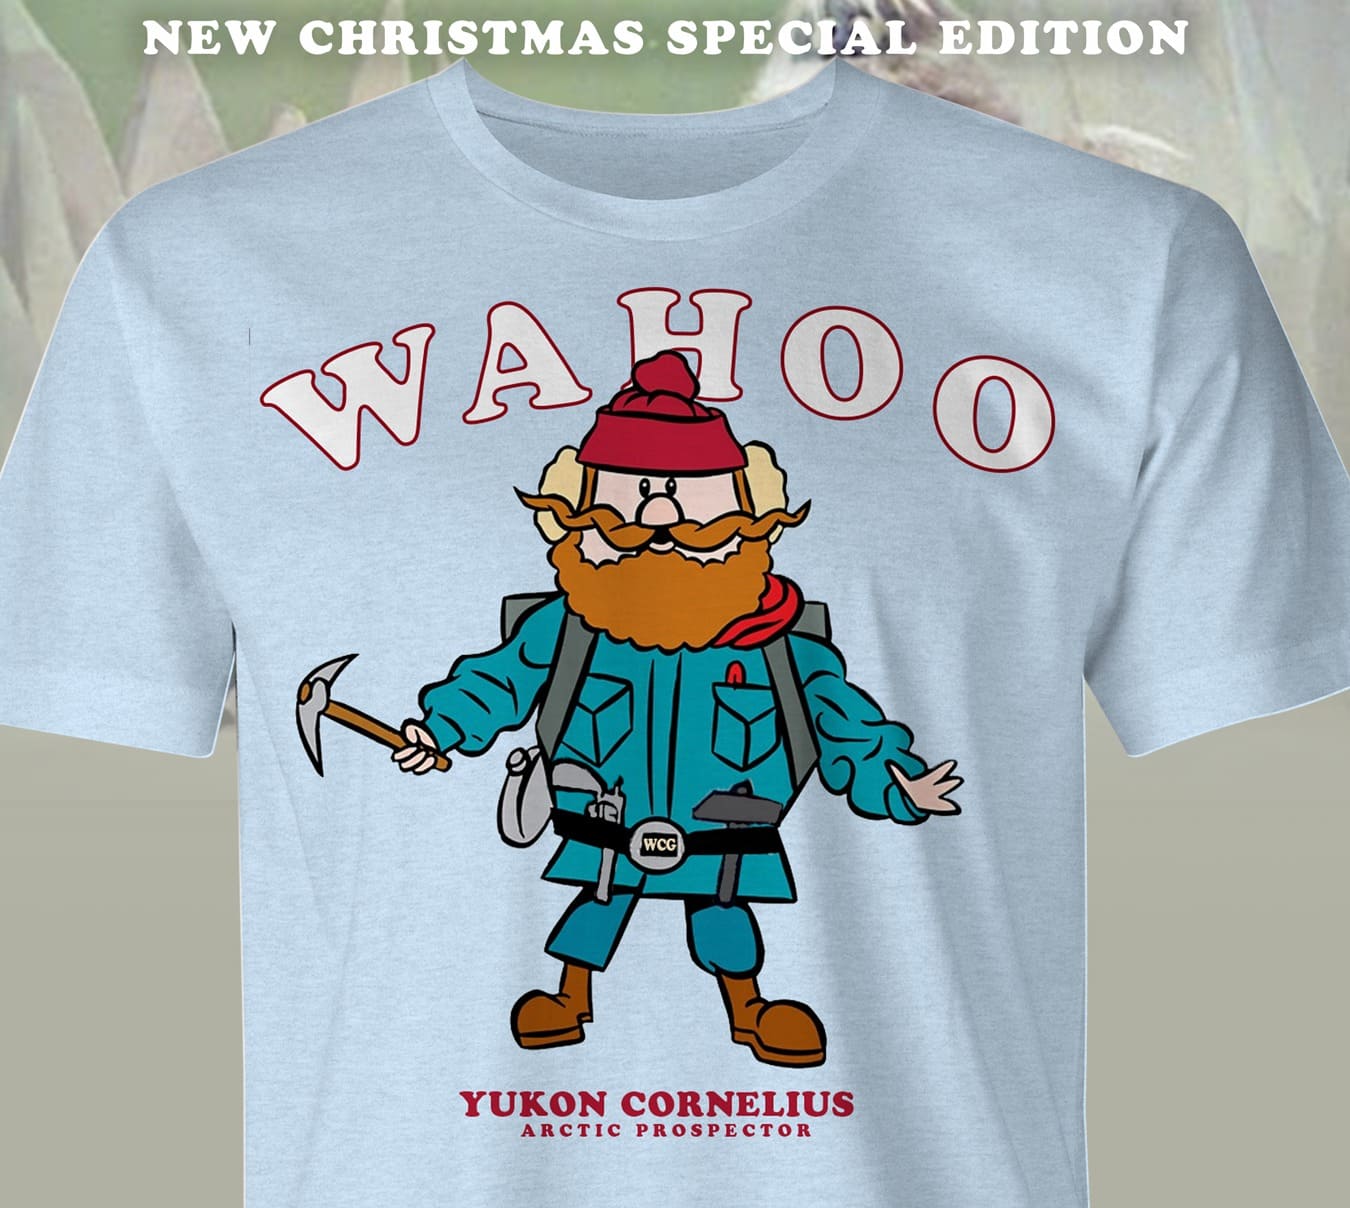 Wahoo Yukon cornelius - Arctic prospector, Rudolph the Red-Nosed Reindeer